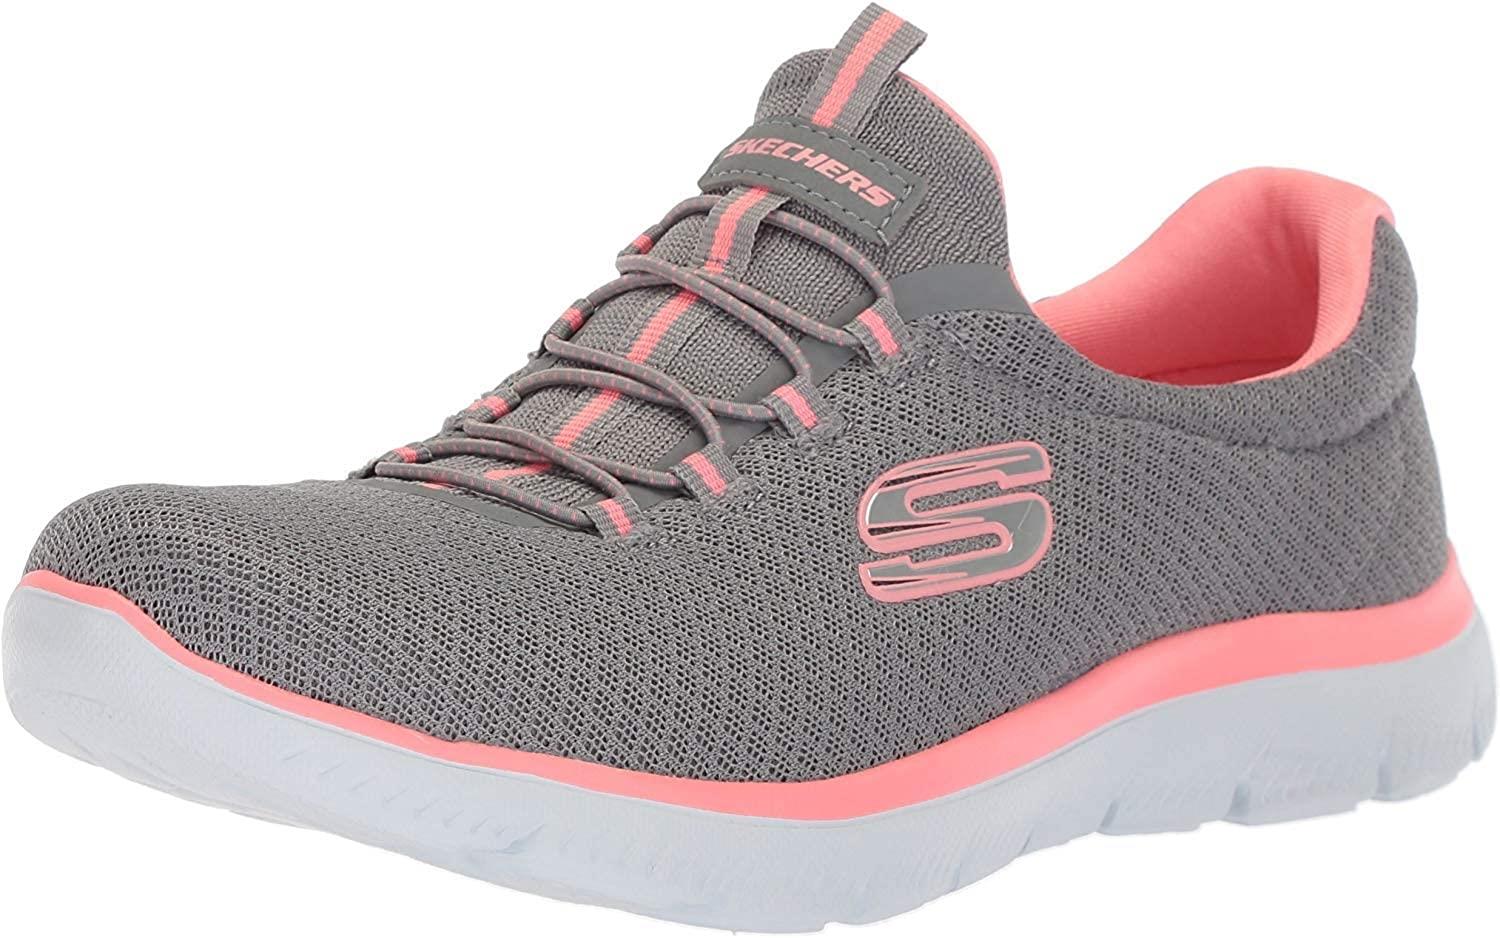 Skechers Brand Womens Memory Slipons Sports Shoes 12980 (Grey/Pink) :: RAJASHOES